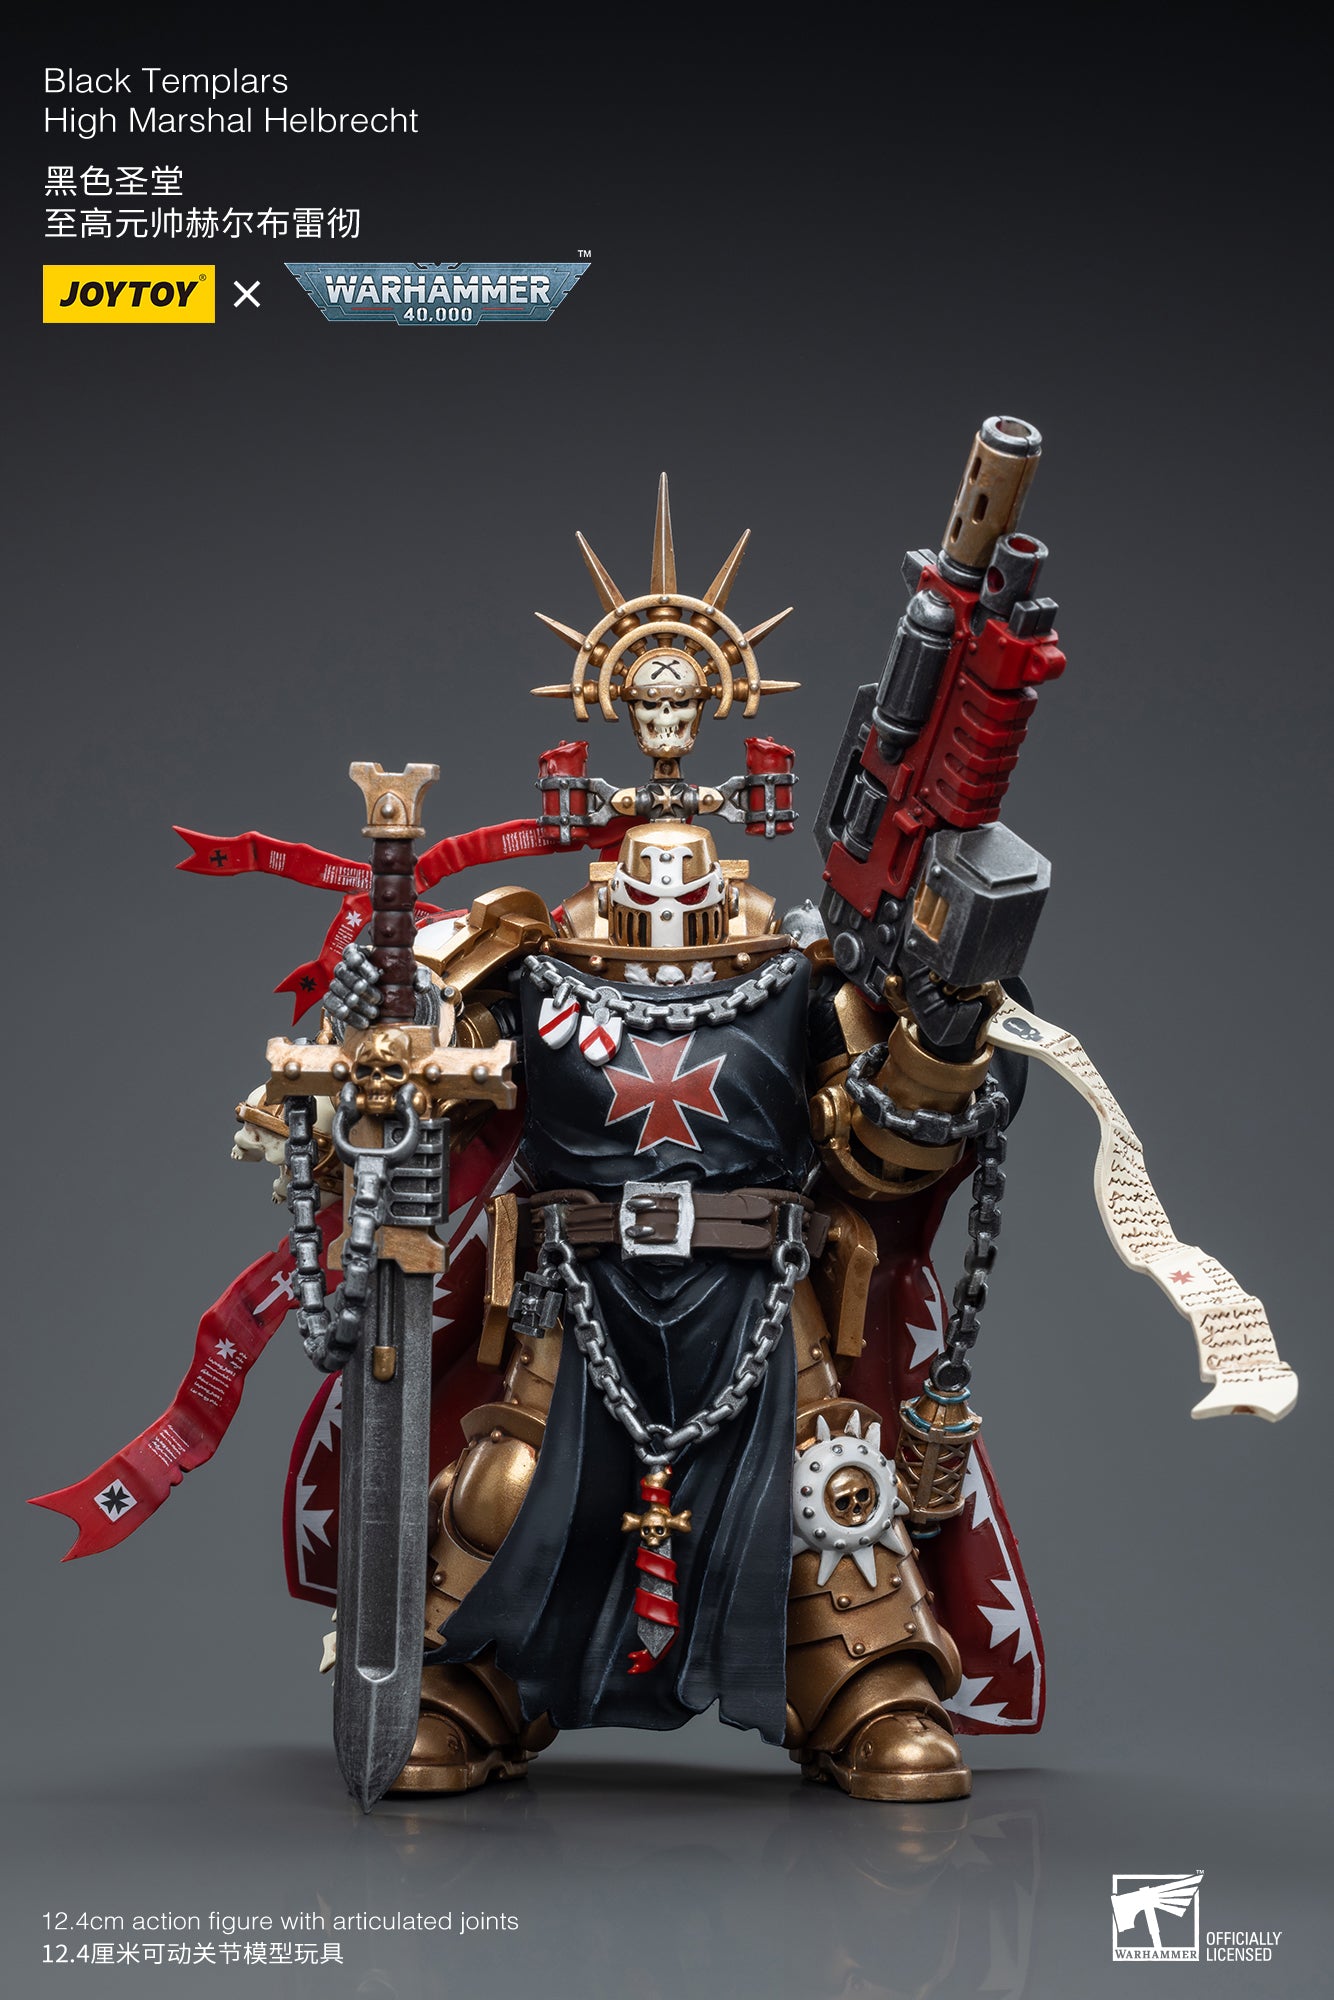 Black Templars High Marshal Helbrecht - Warhammer 40K Action Figure By JOYTOY